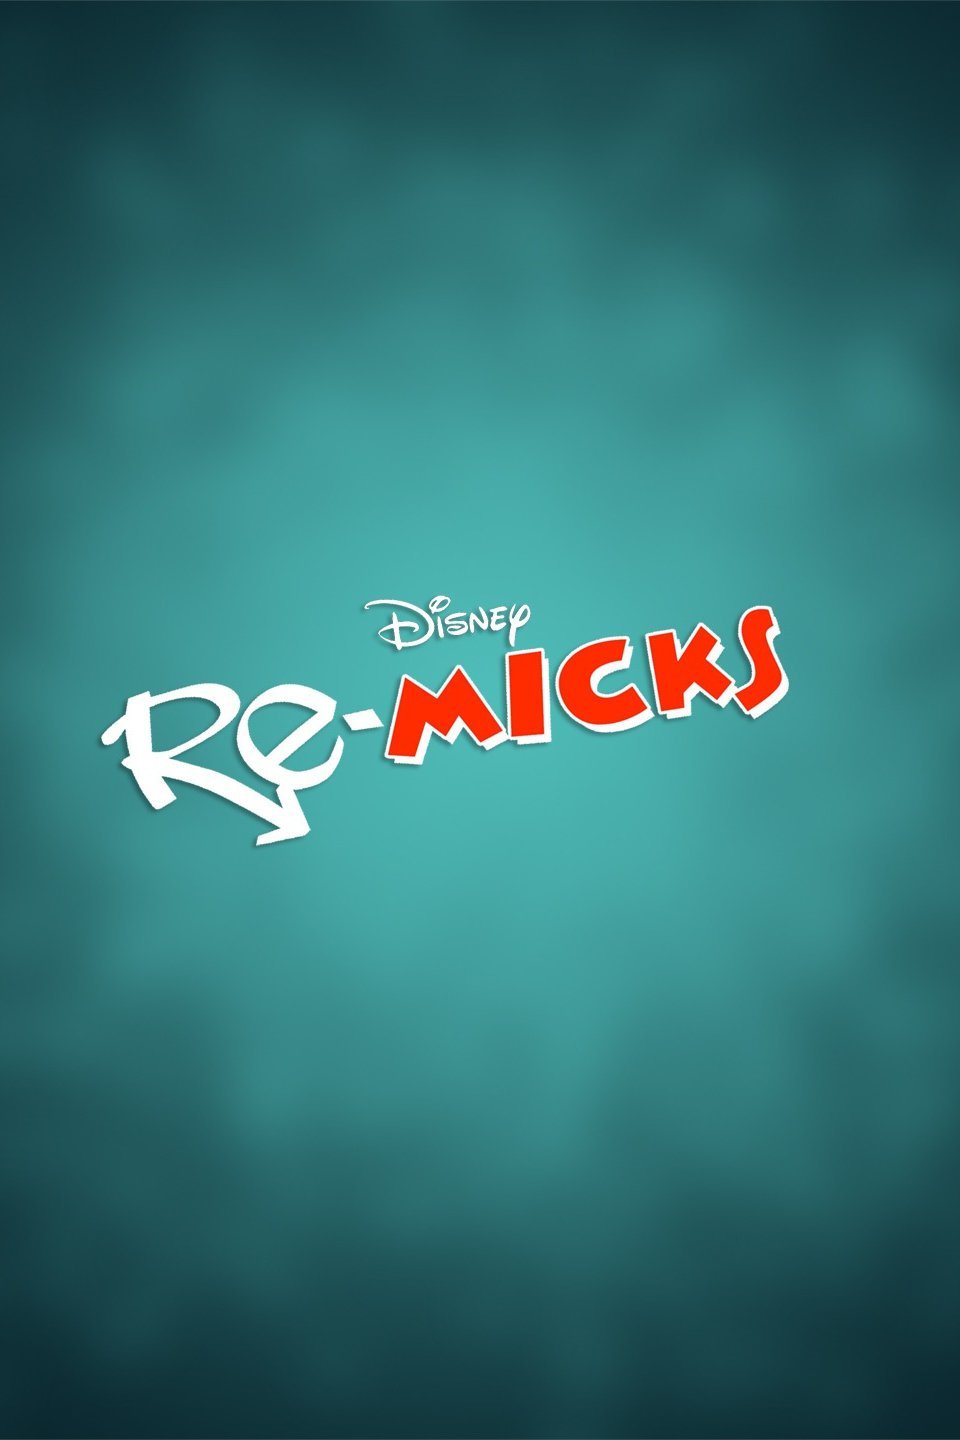 Re-Micks - Rotten Tomatoes